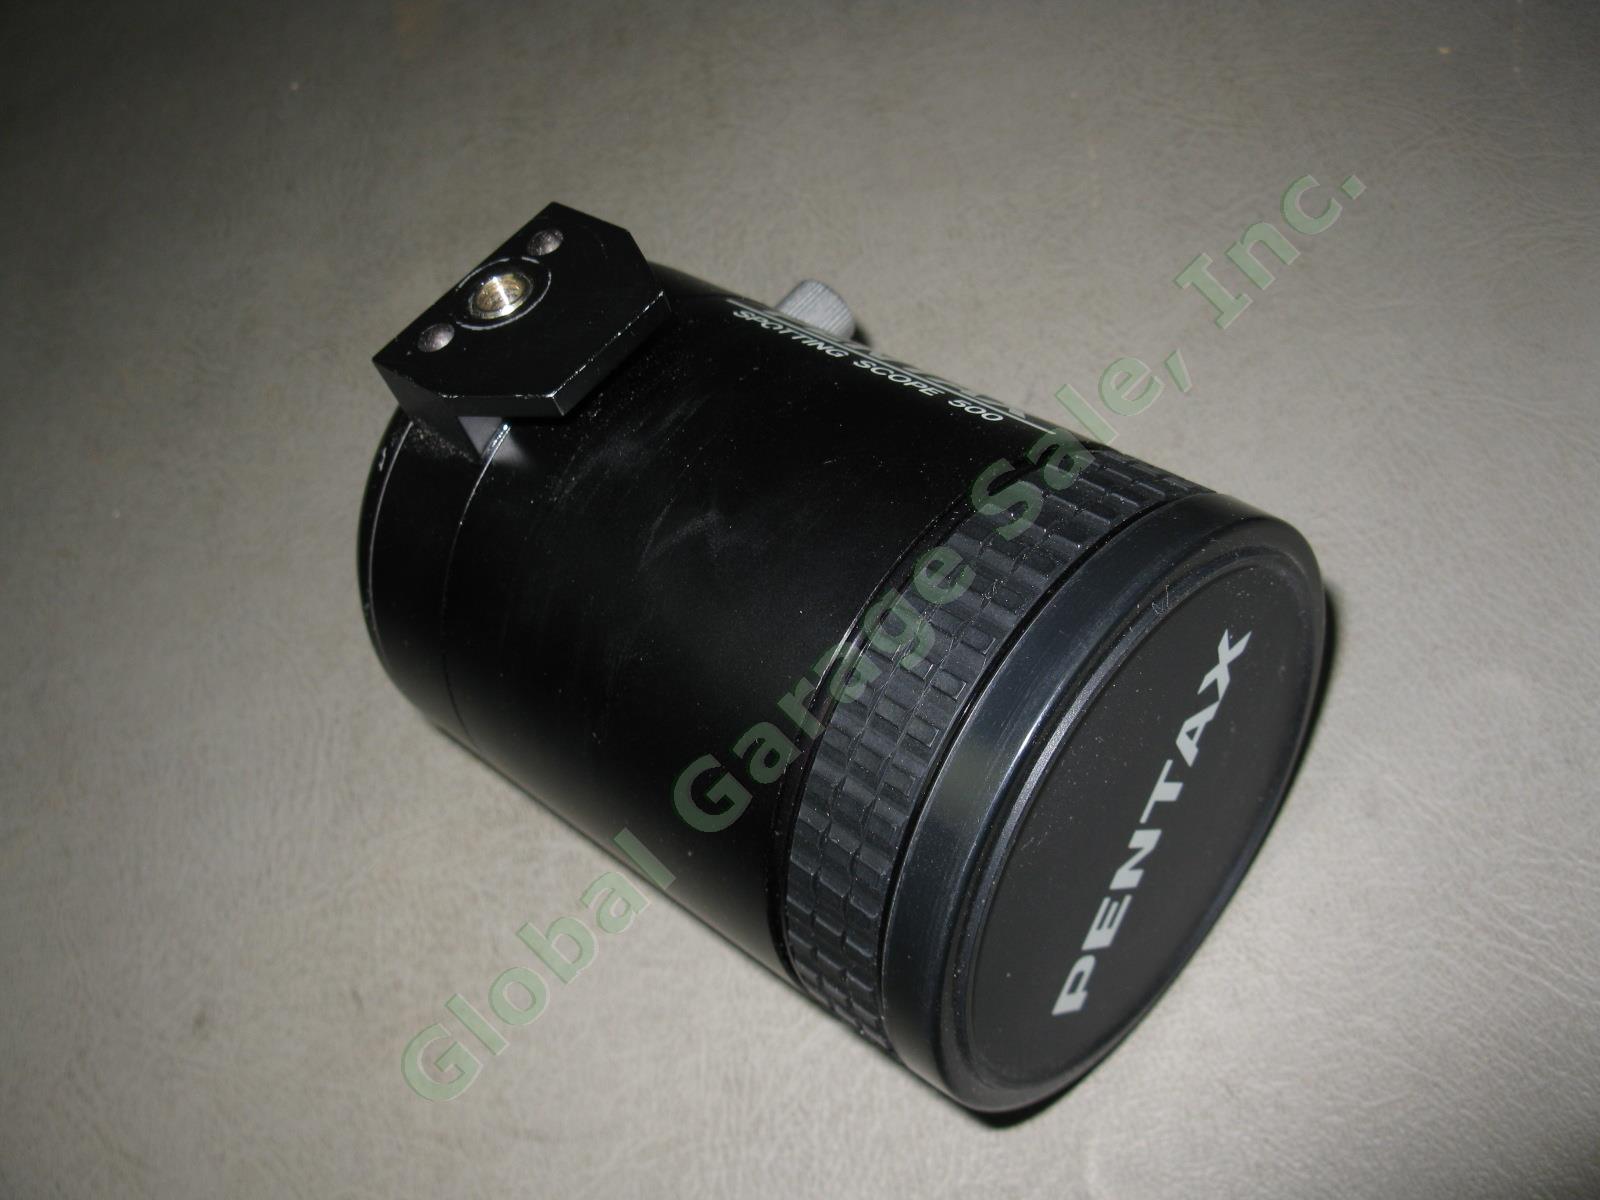 Pentax 500mm Angled Spotting Scope Telephoto Lens W/ Hood Cap Pouch Bag Bundle + 1